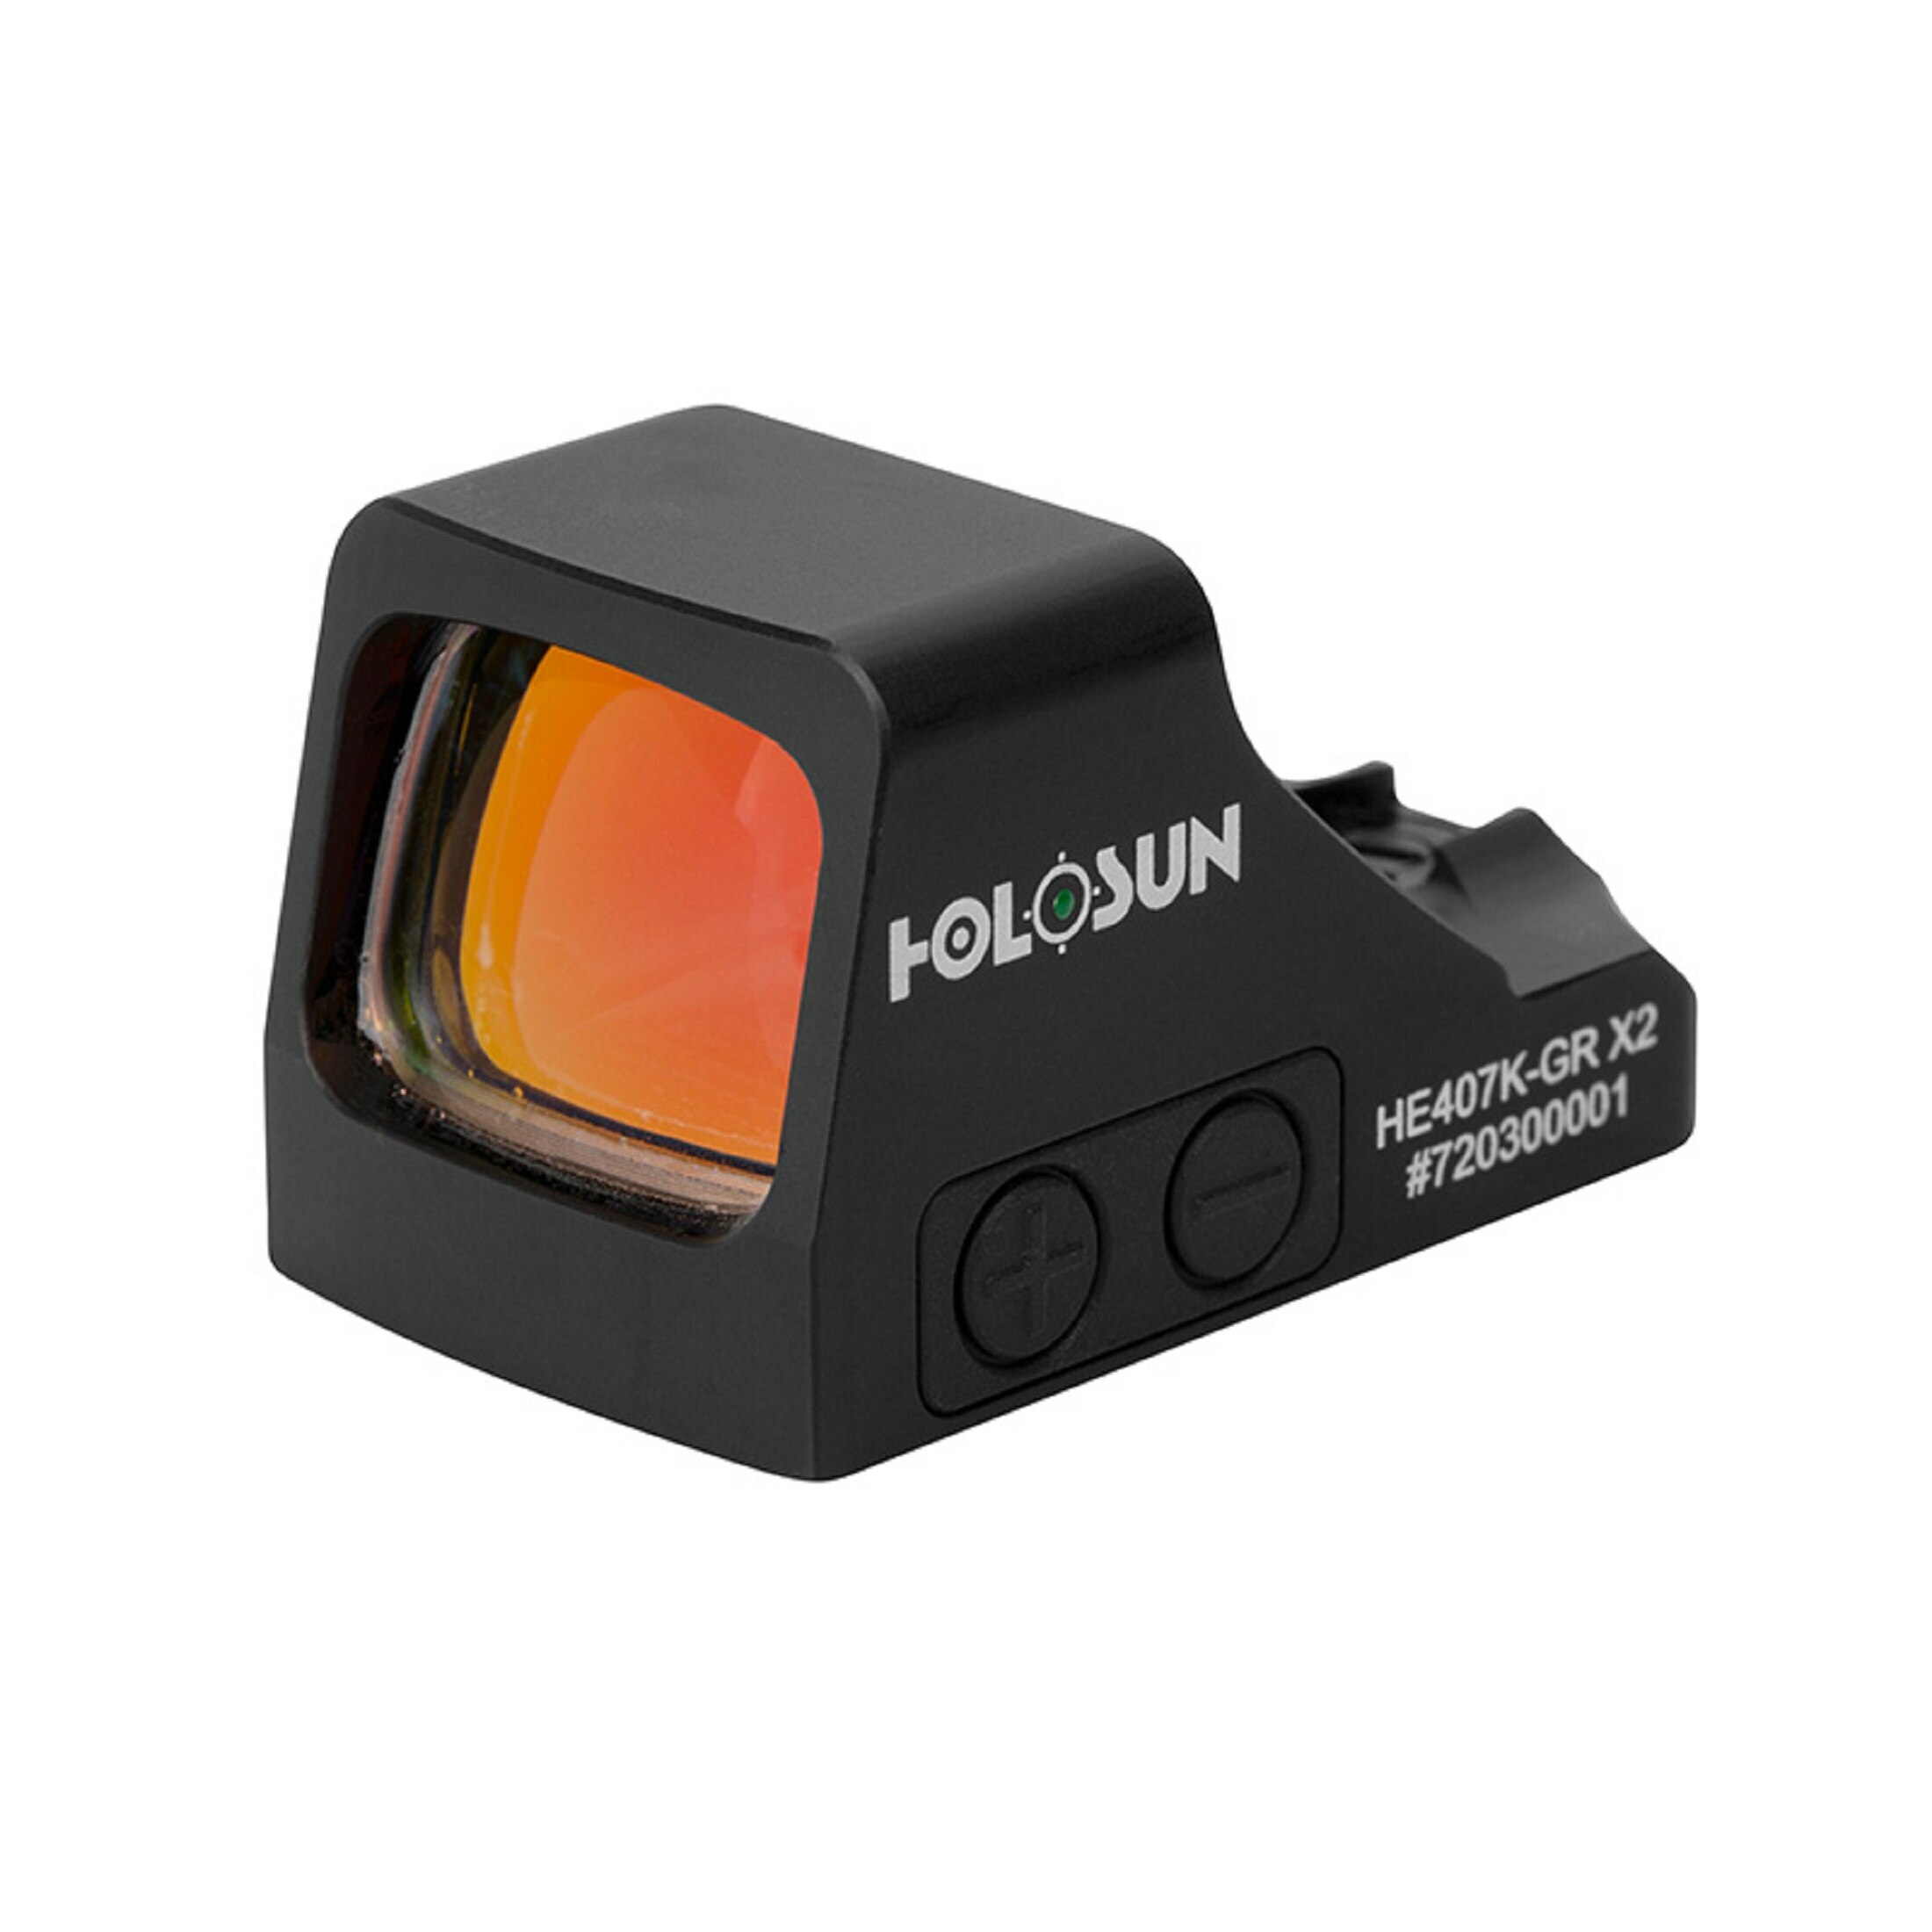 Holosun Dot Sight CLASSIC HE407K-GR-X2